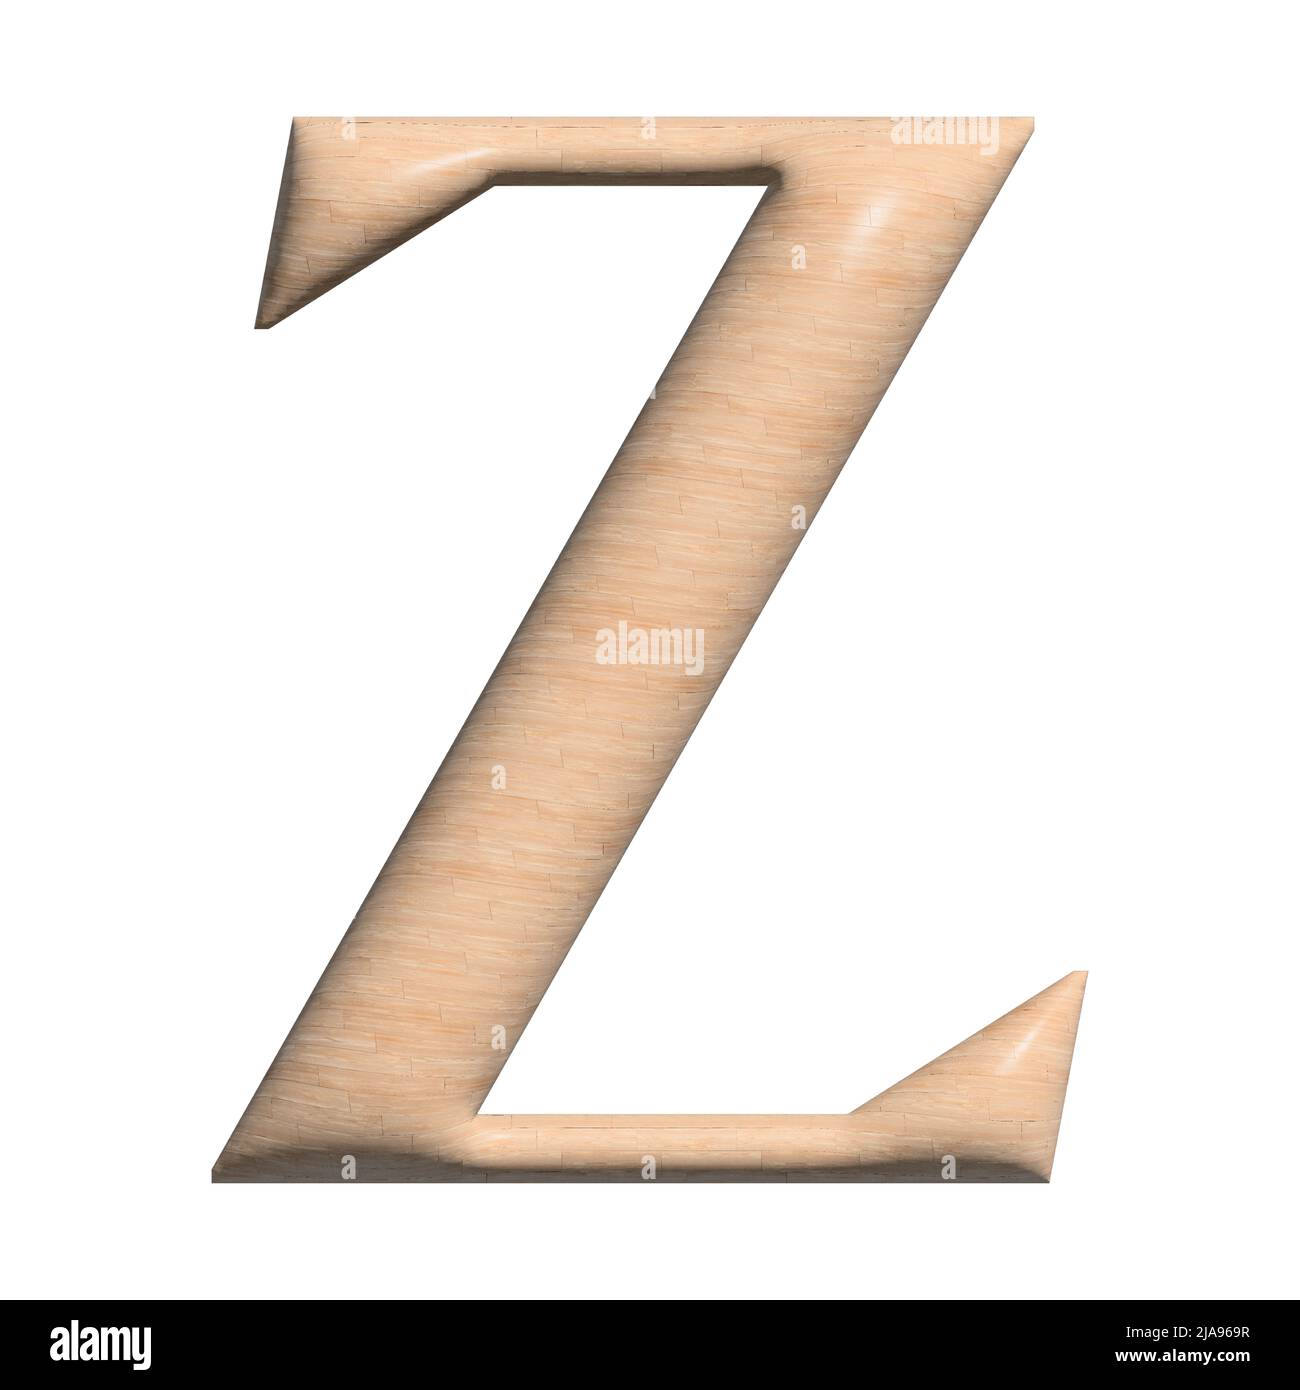 3D Wood capital Z letter illustration on white background Stock Photo